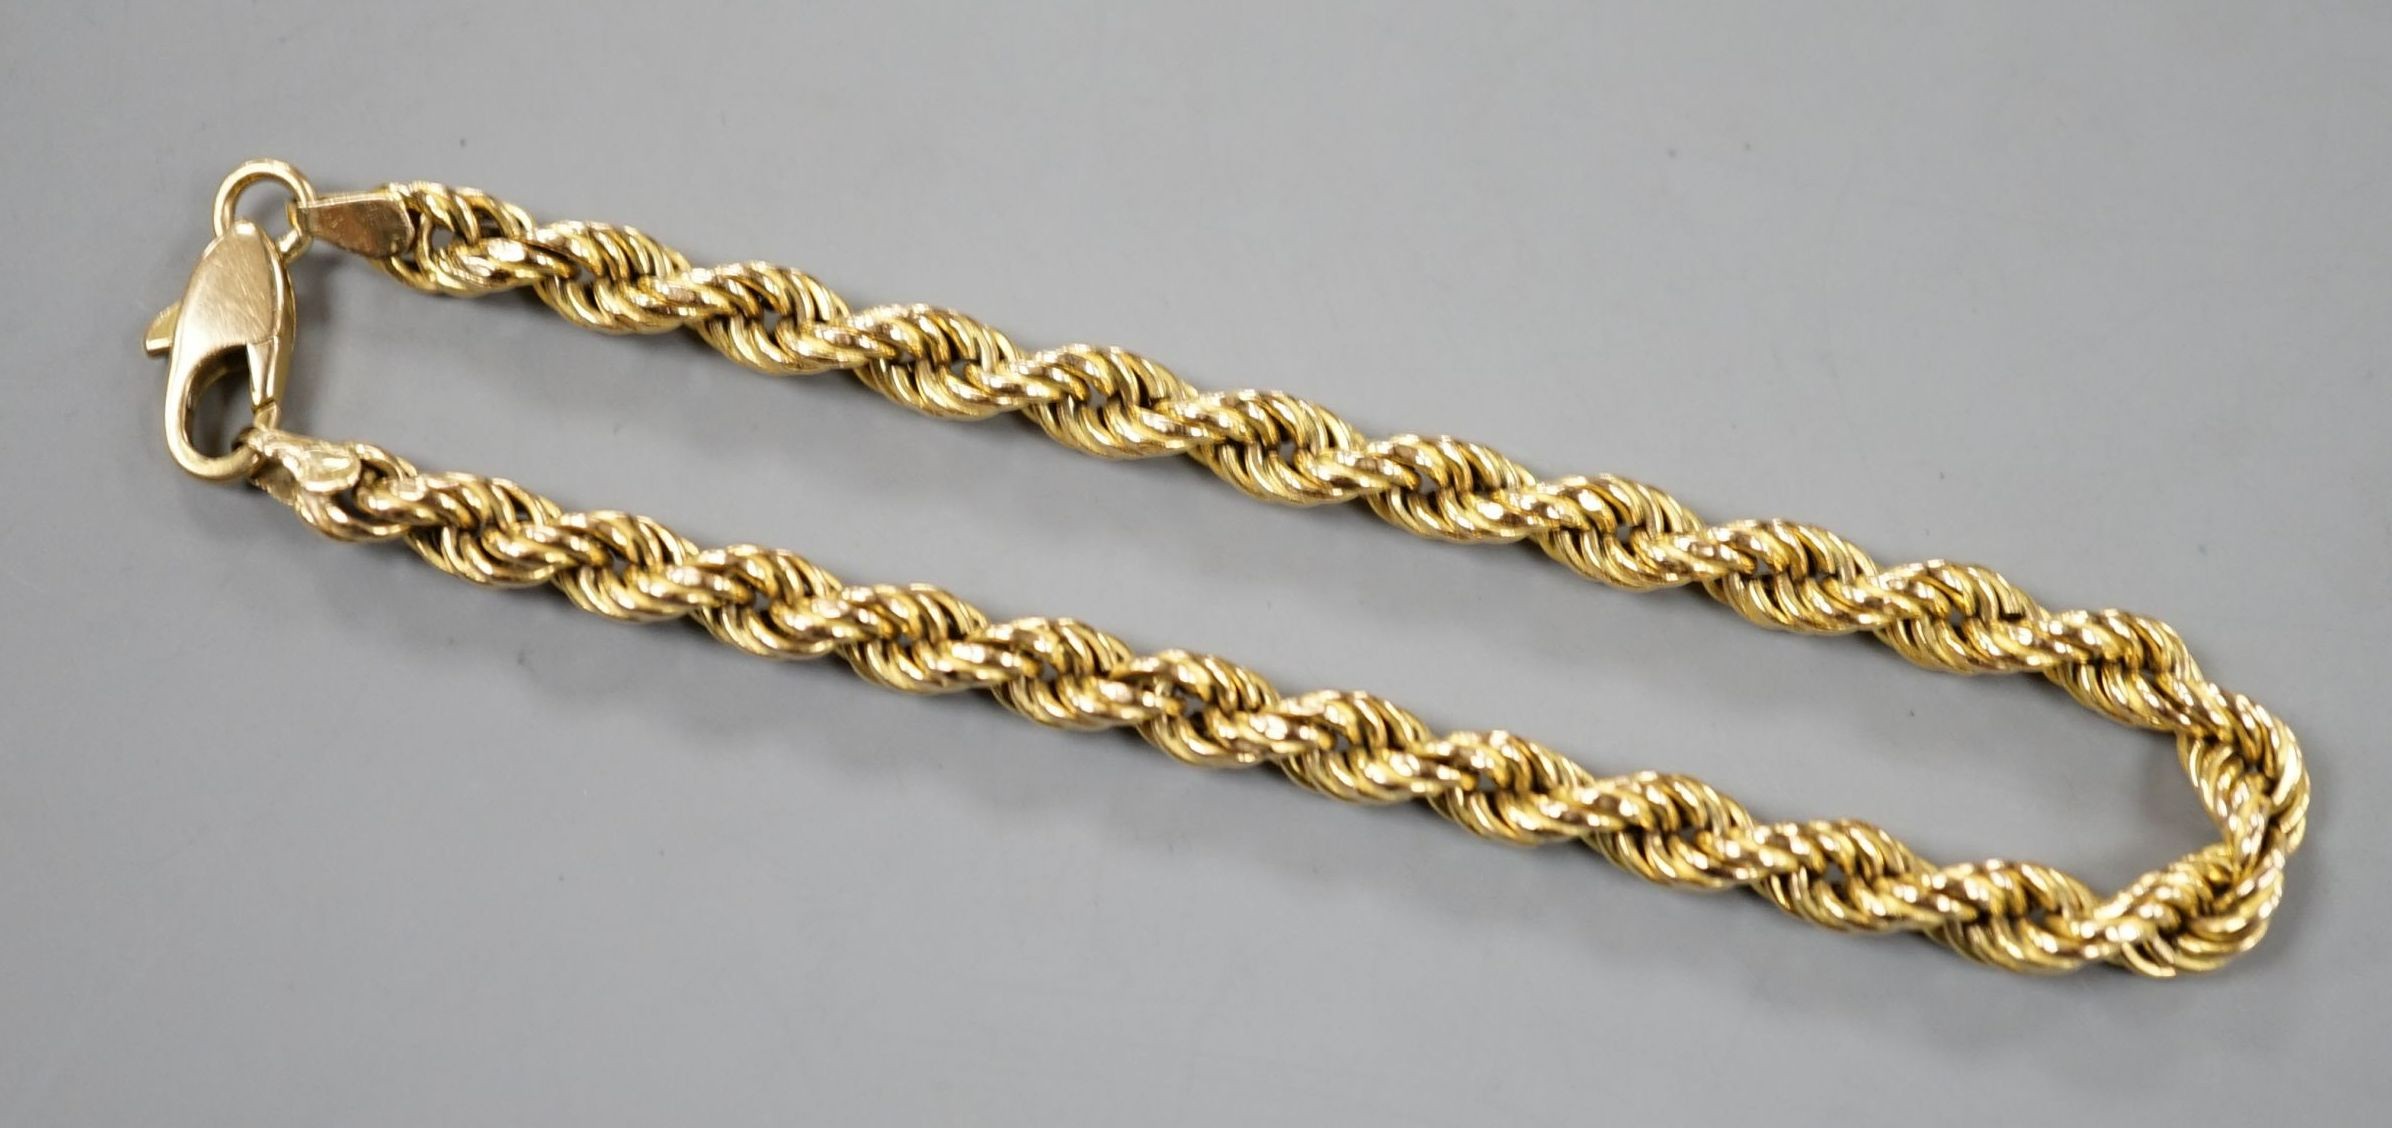 A modern 585 yellow metal rope twist bracelet, 19cm